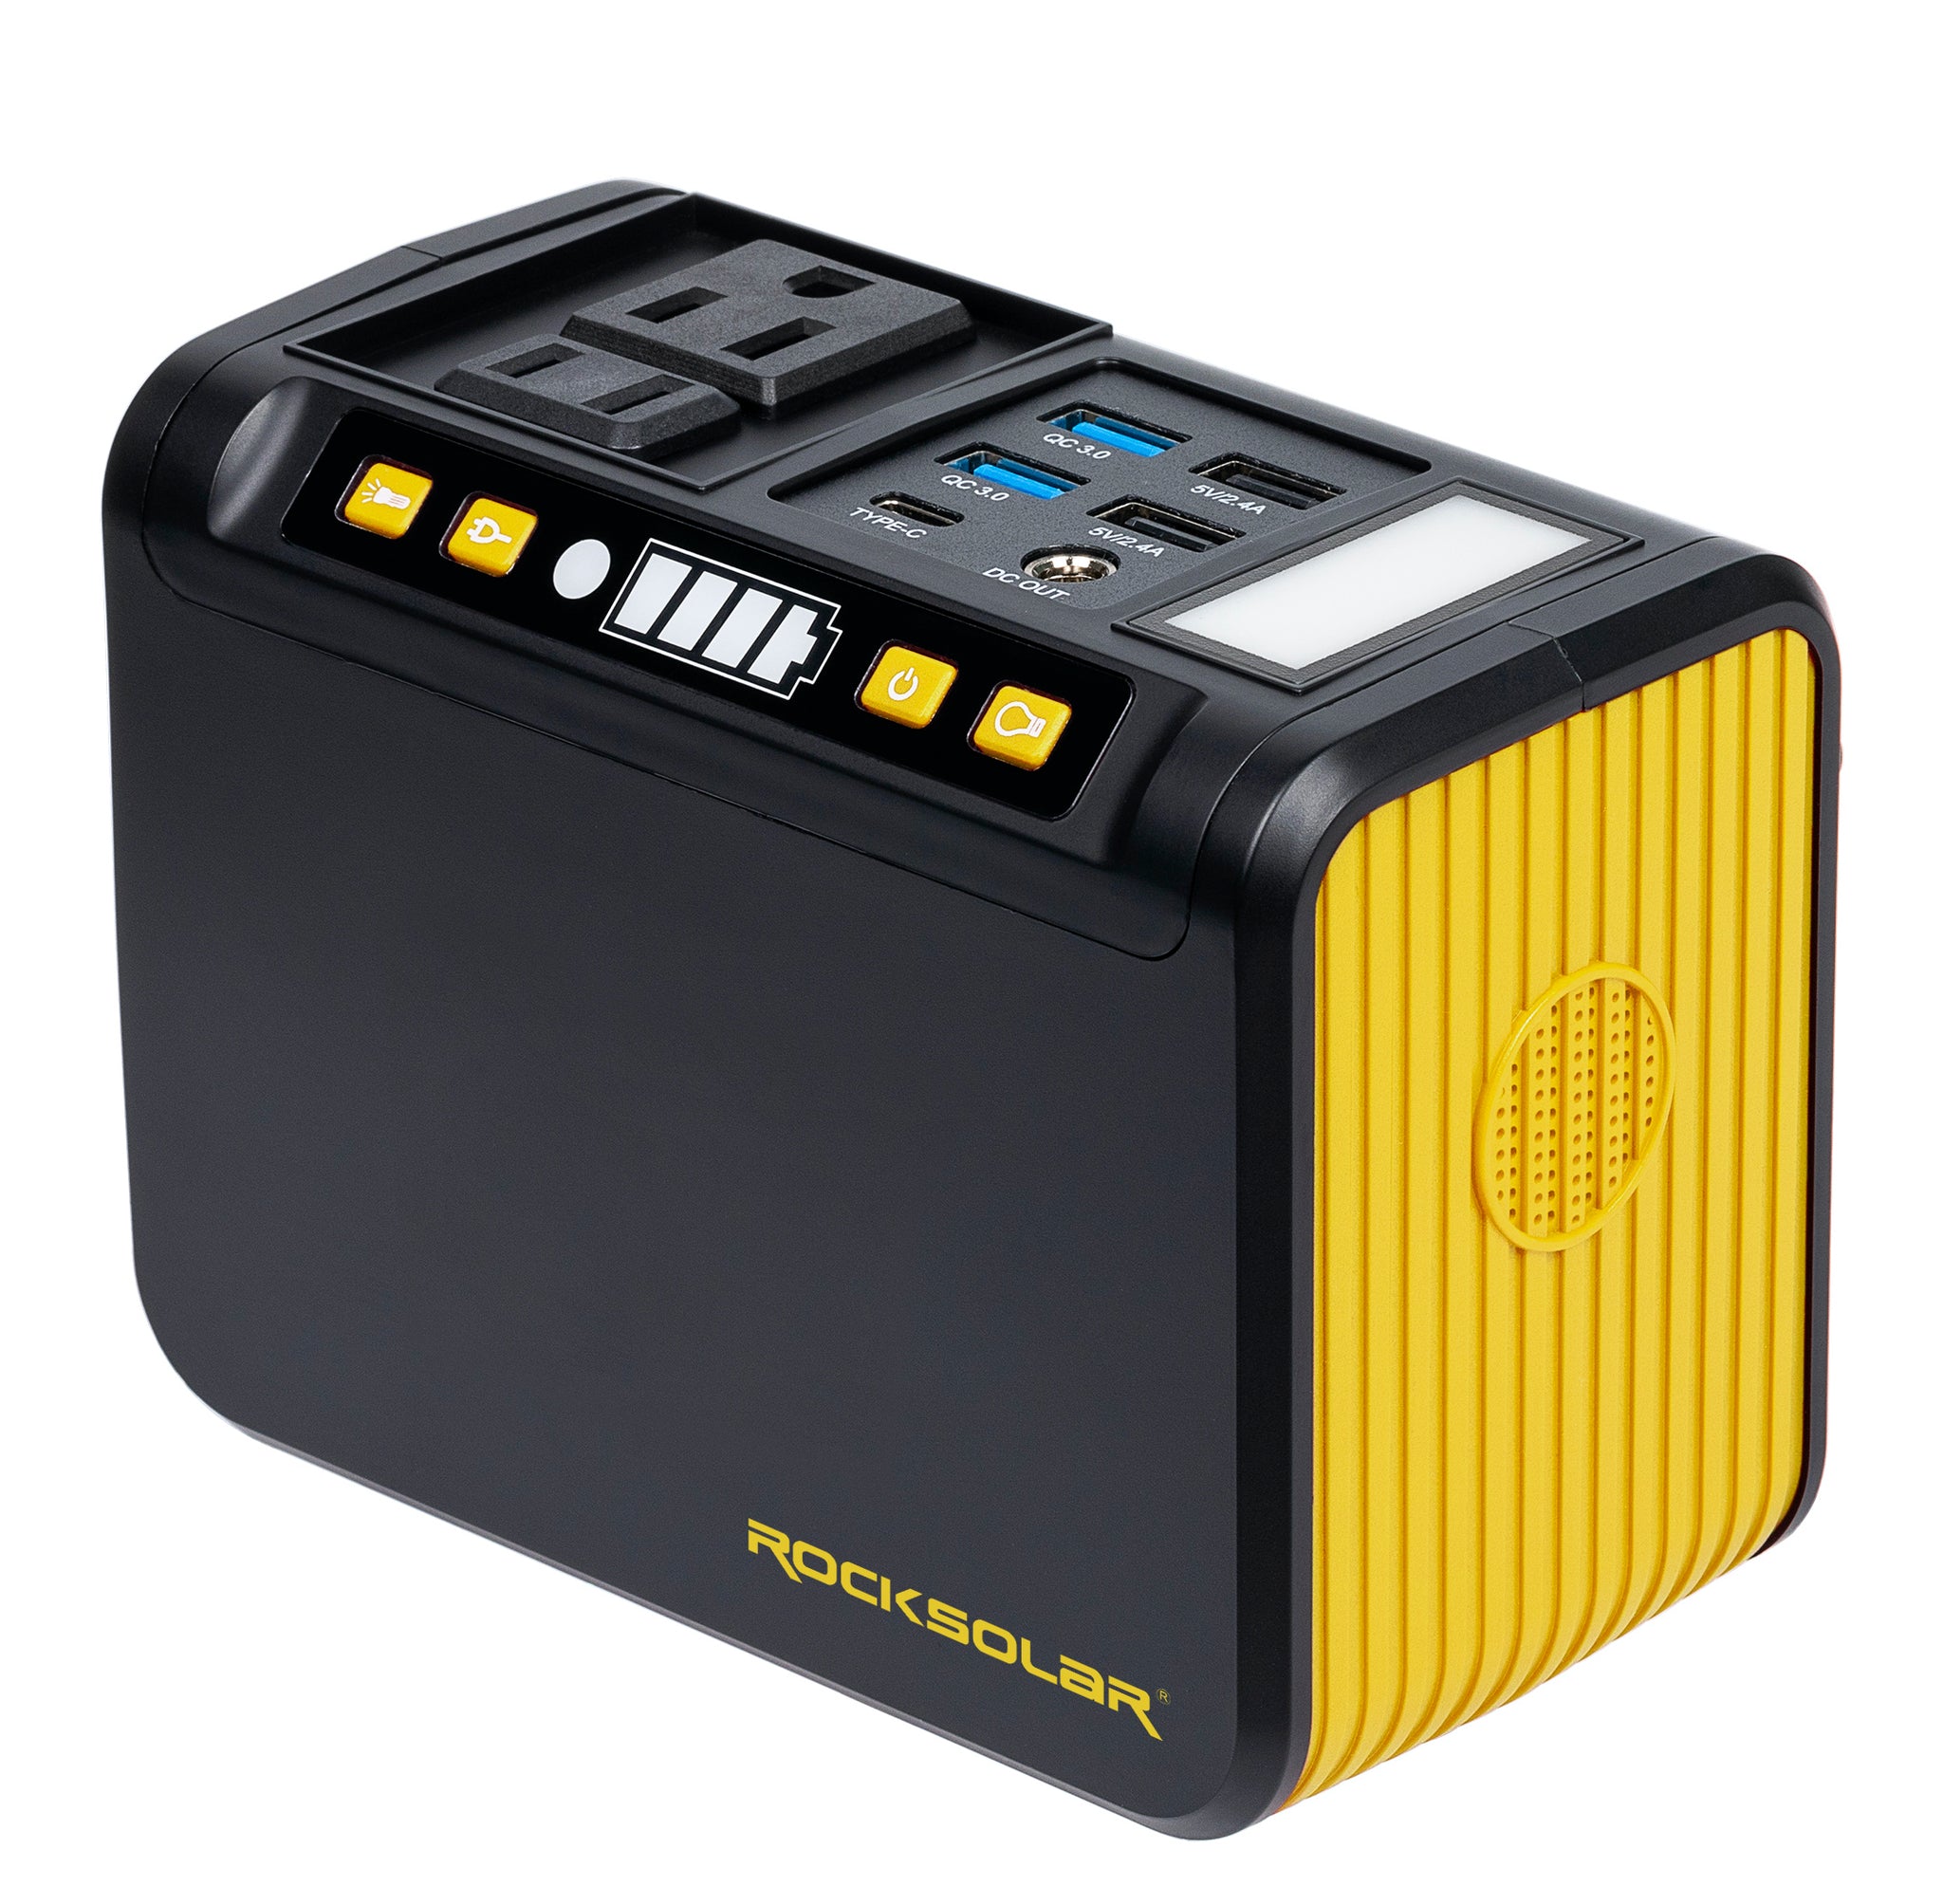 ROCKSOLAR Weekender 80W Portable Power Station - Lithium Battery and Solar Generator